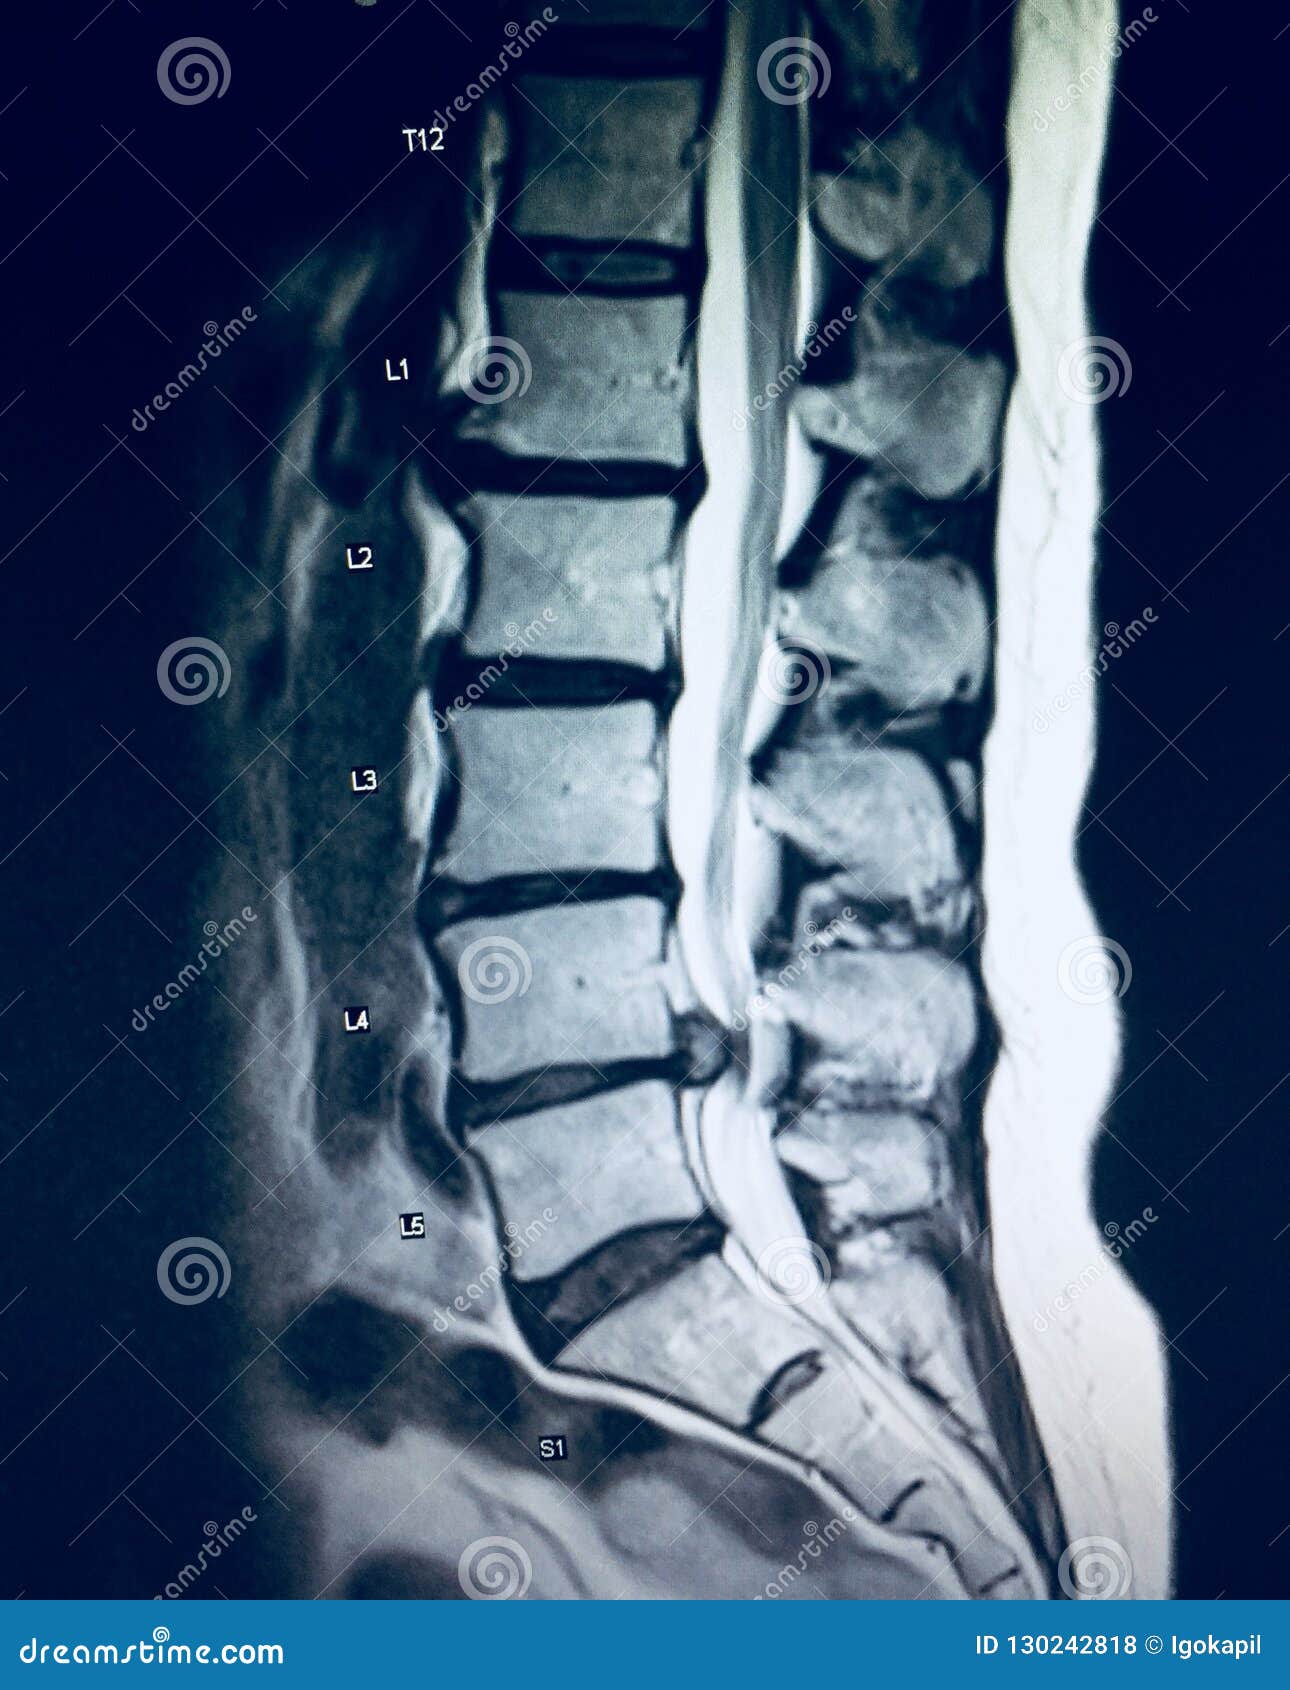 severe pathology of lumbar spine herniation mri